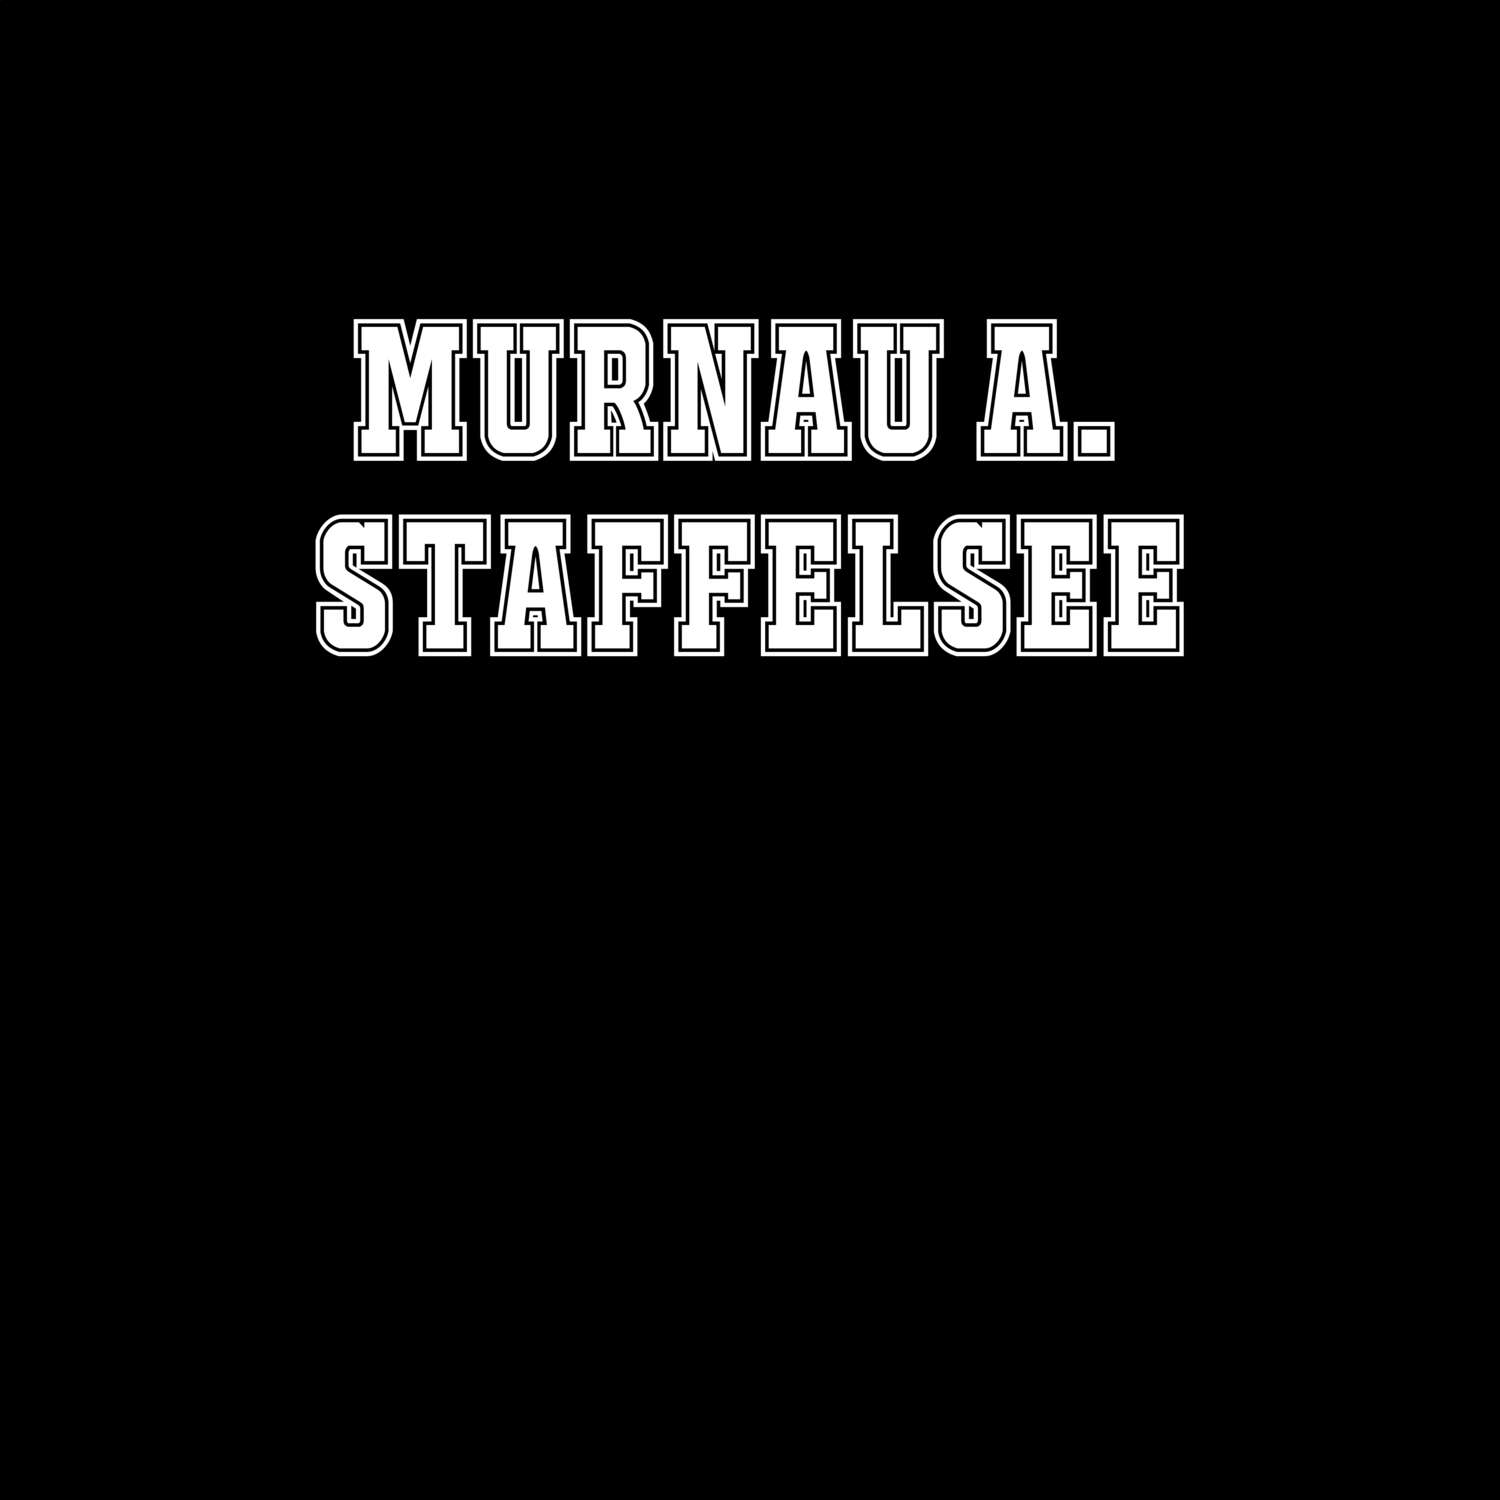 Murnau a. Staffelsee T-Shirt »Classic«